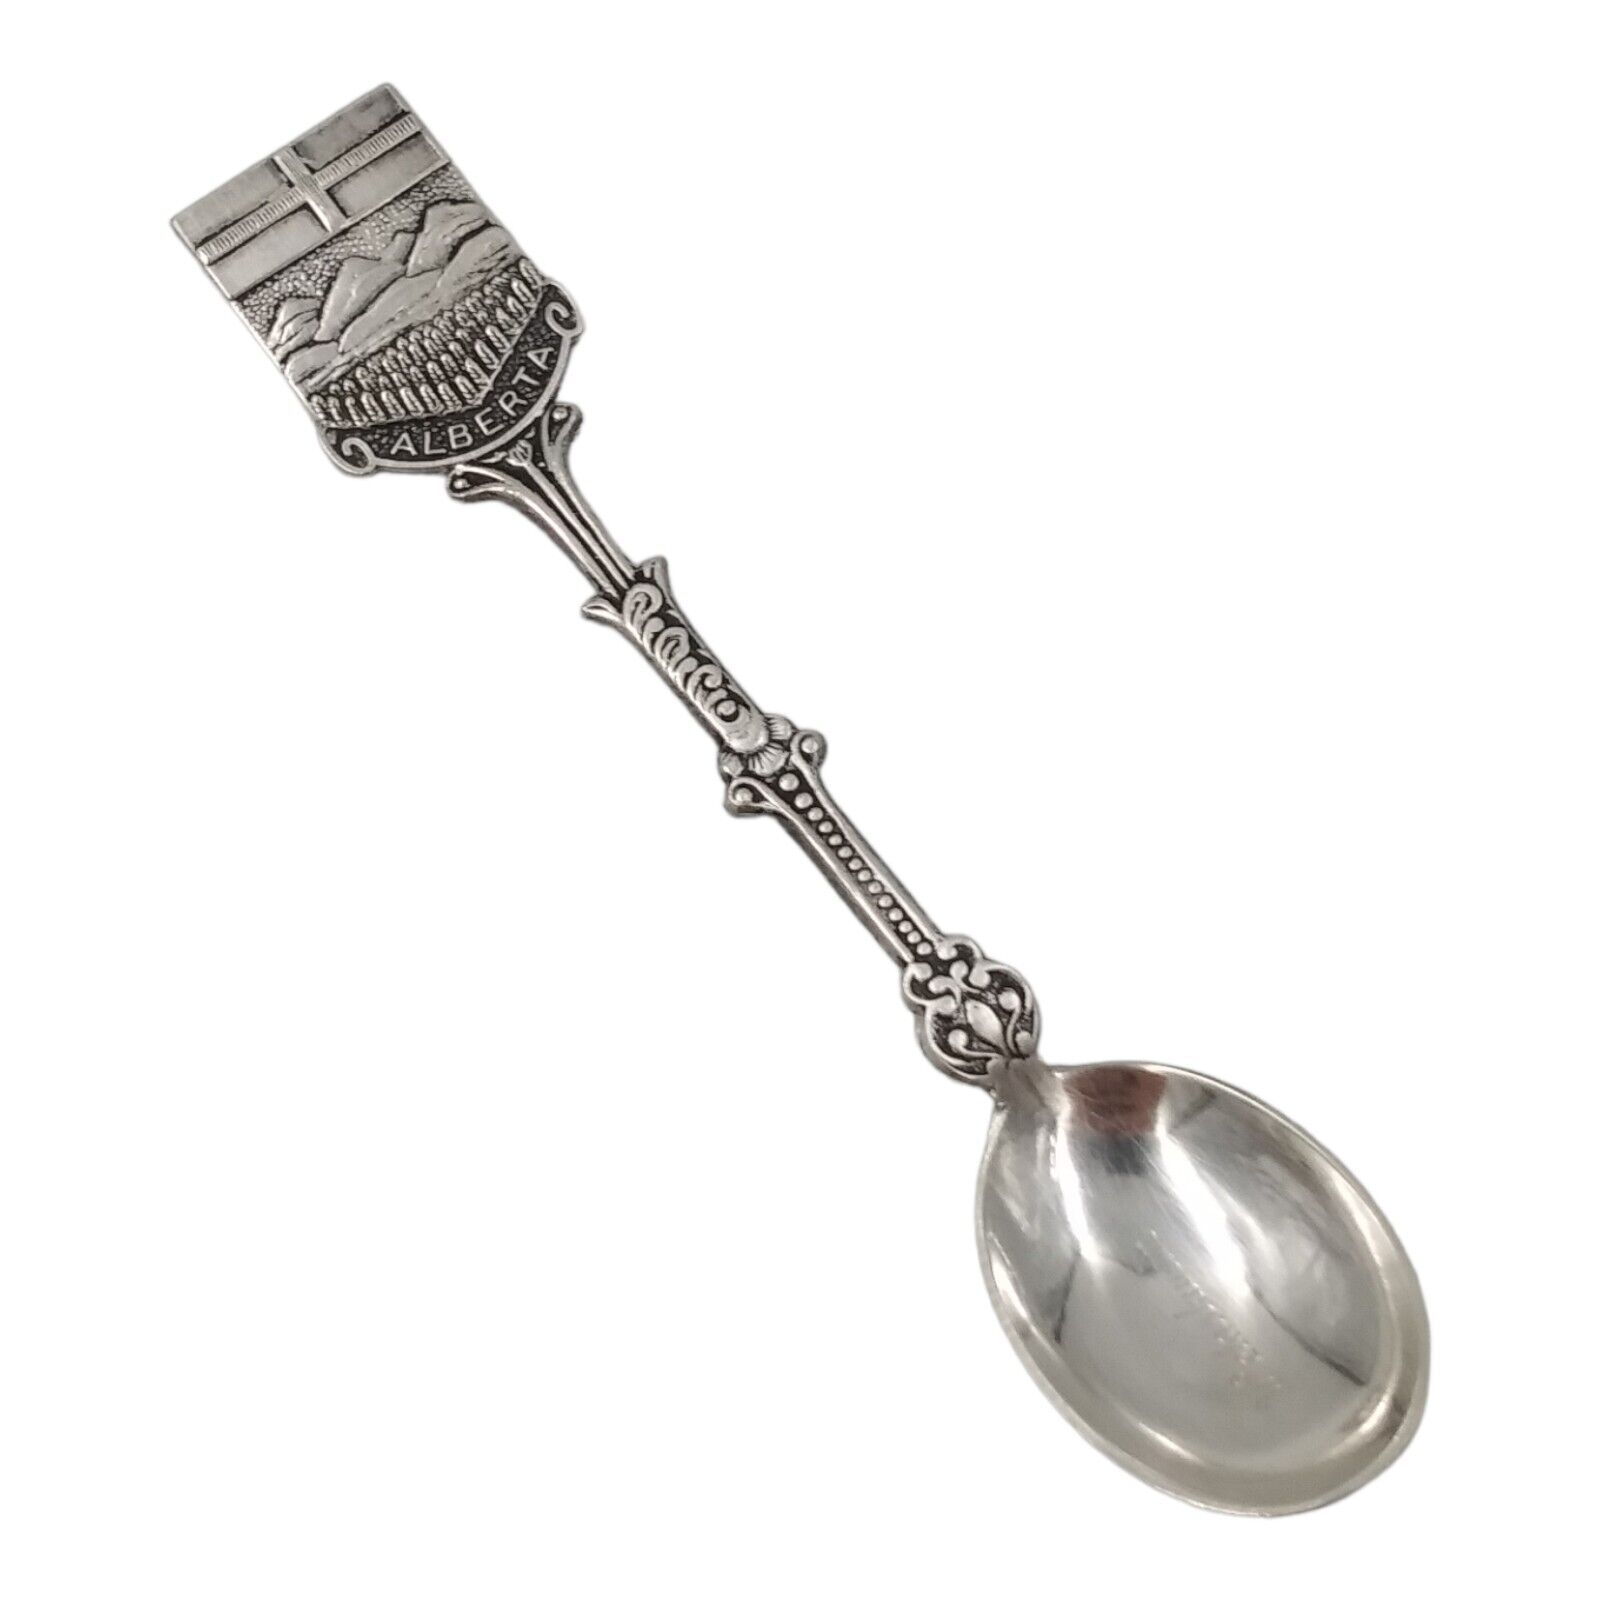 Vintage Wetaskiwin Alberta Canada Souvenir Spoon US Collectible